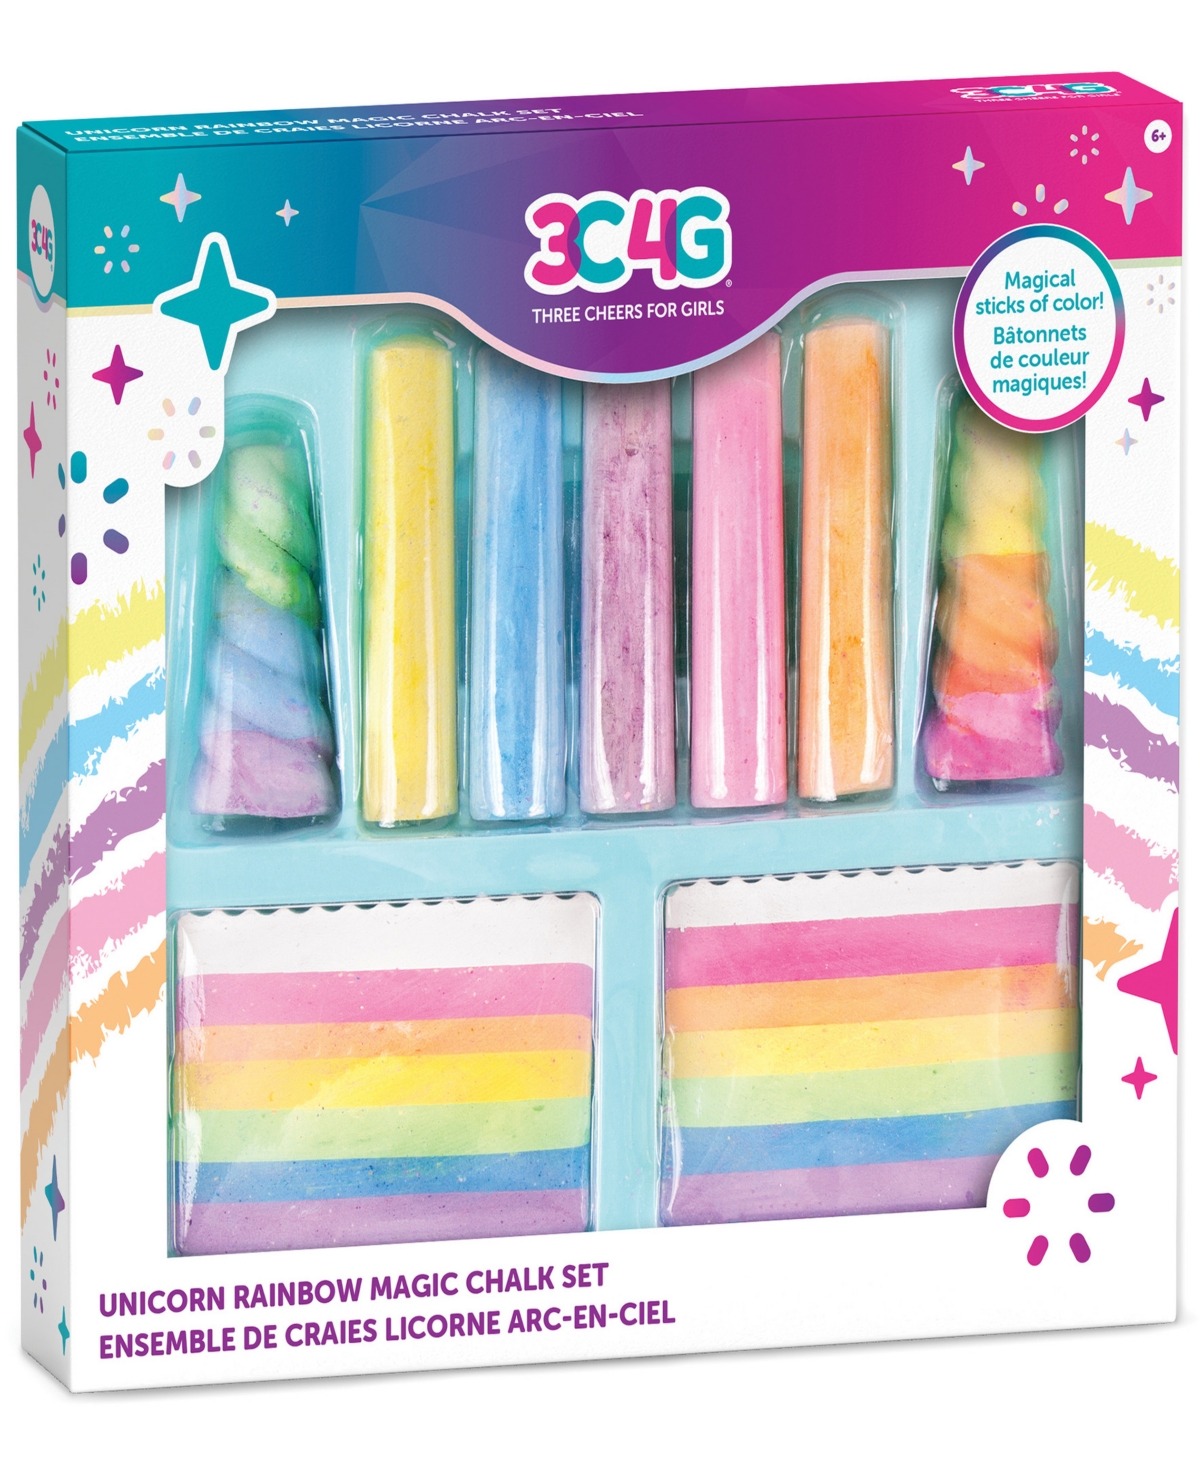 Three Cheers For Girls 3c4g Unicorn Rainbow Magic Chalk 9 Piece Set, Make It Real, Sidewalk Chalk For Kids Washable Outdoor In Multi